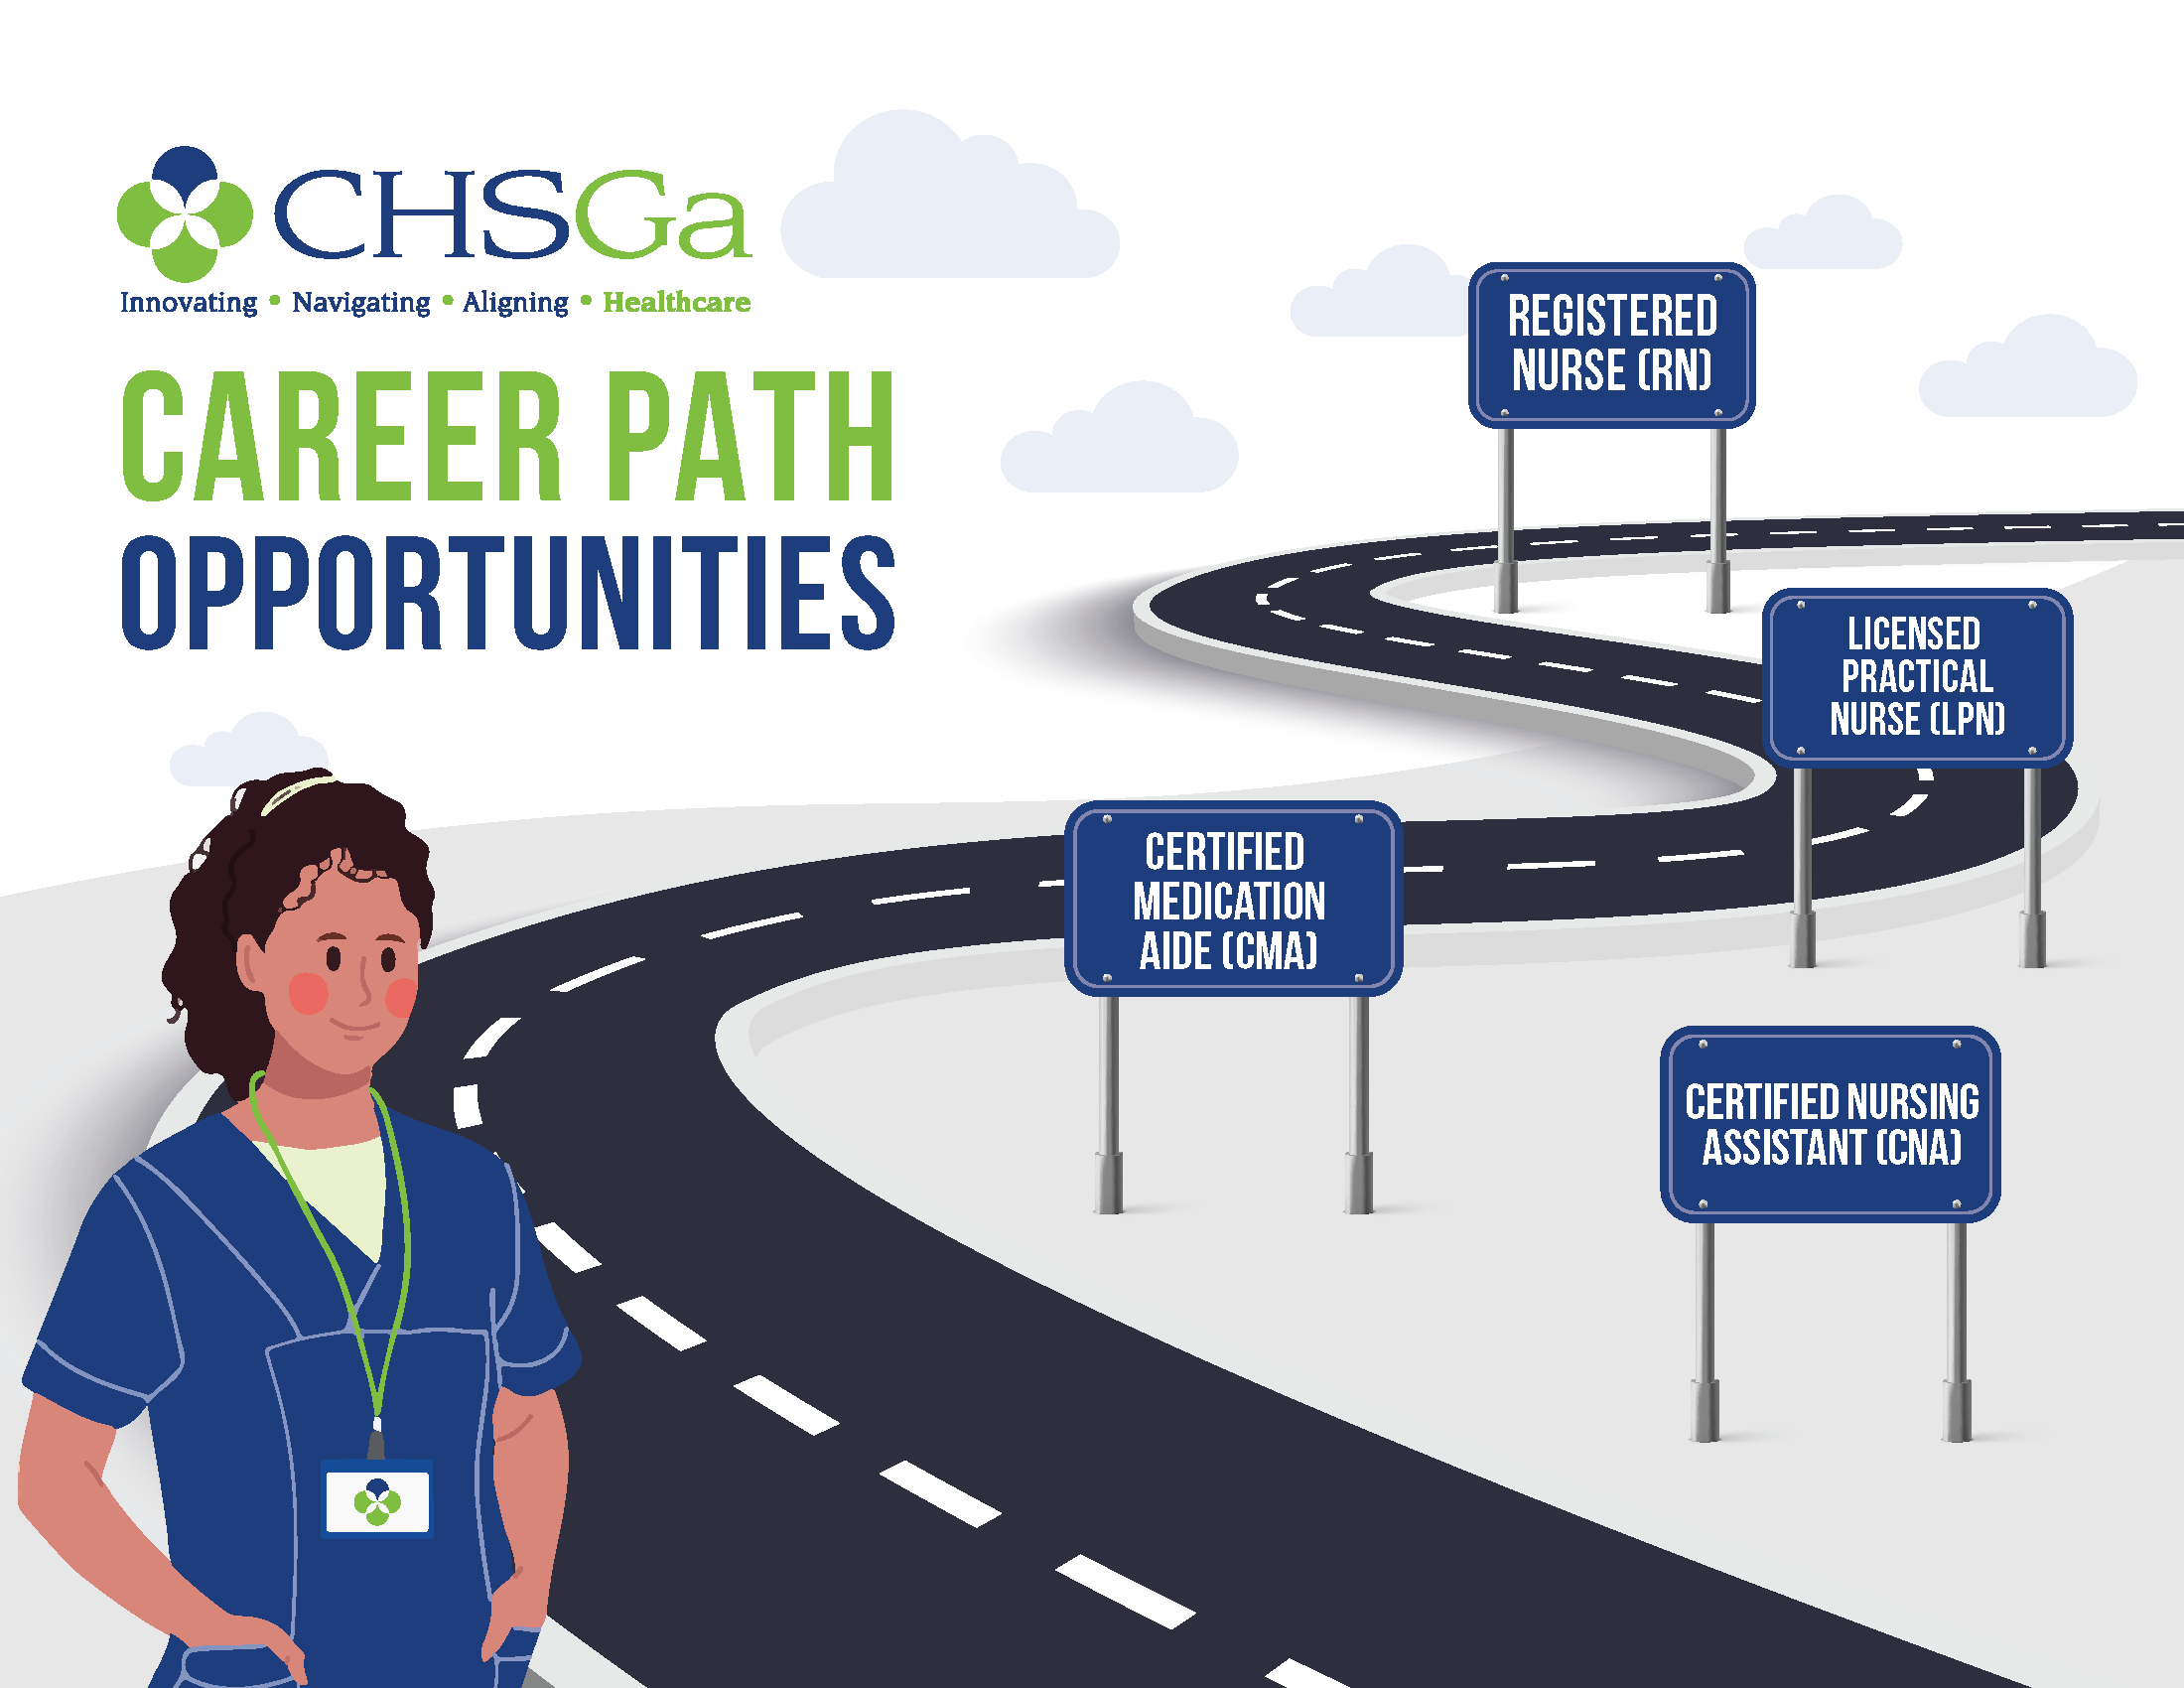 Career Pathway roadmap infographic